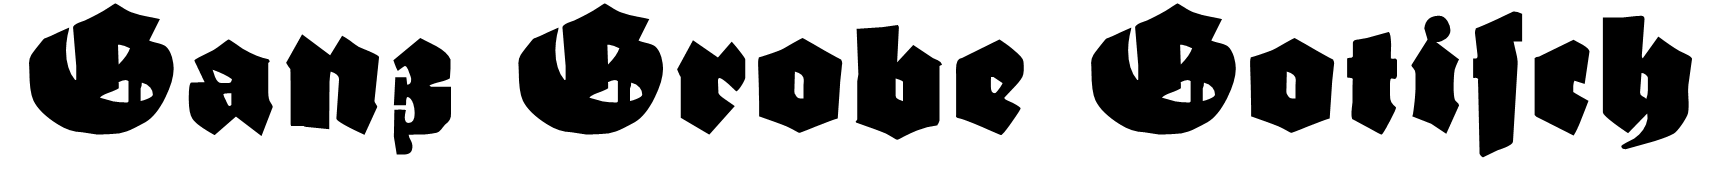 A German Fraktur font called "Ganz Grobe Gotisch" from the Walden Font Co. It is part of the Gutenberg Press set of fonts.